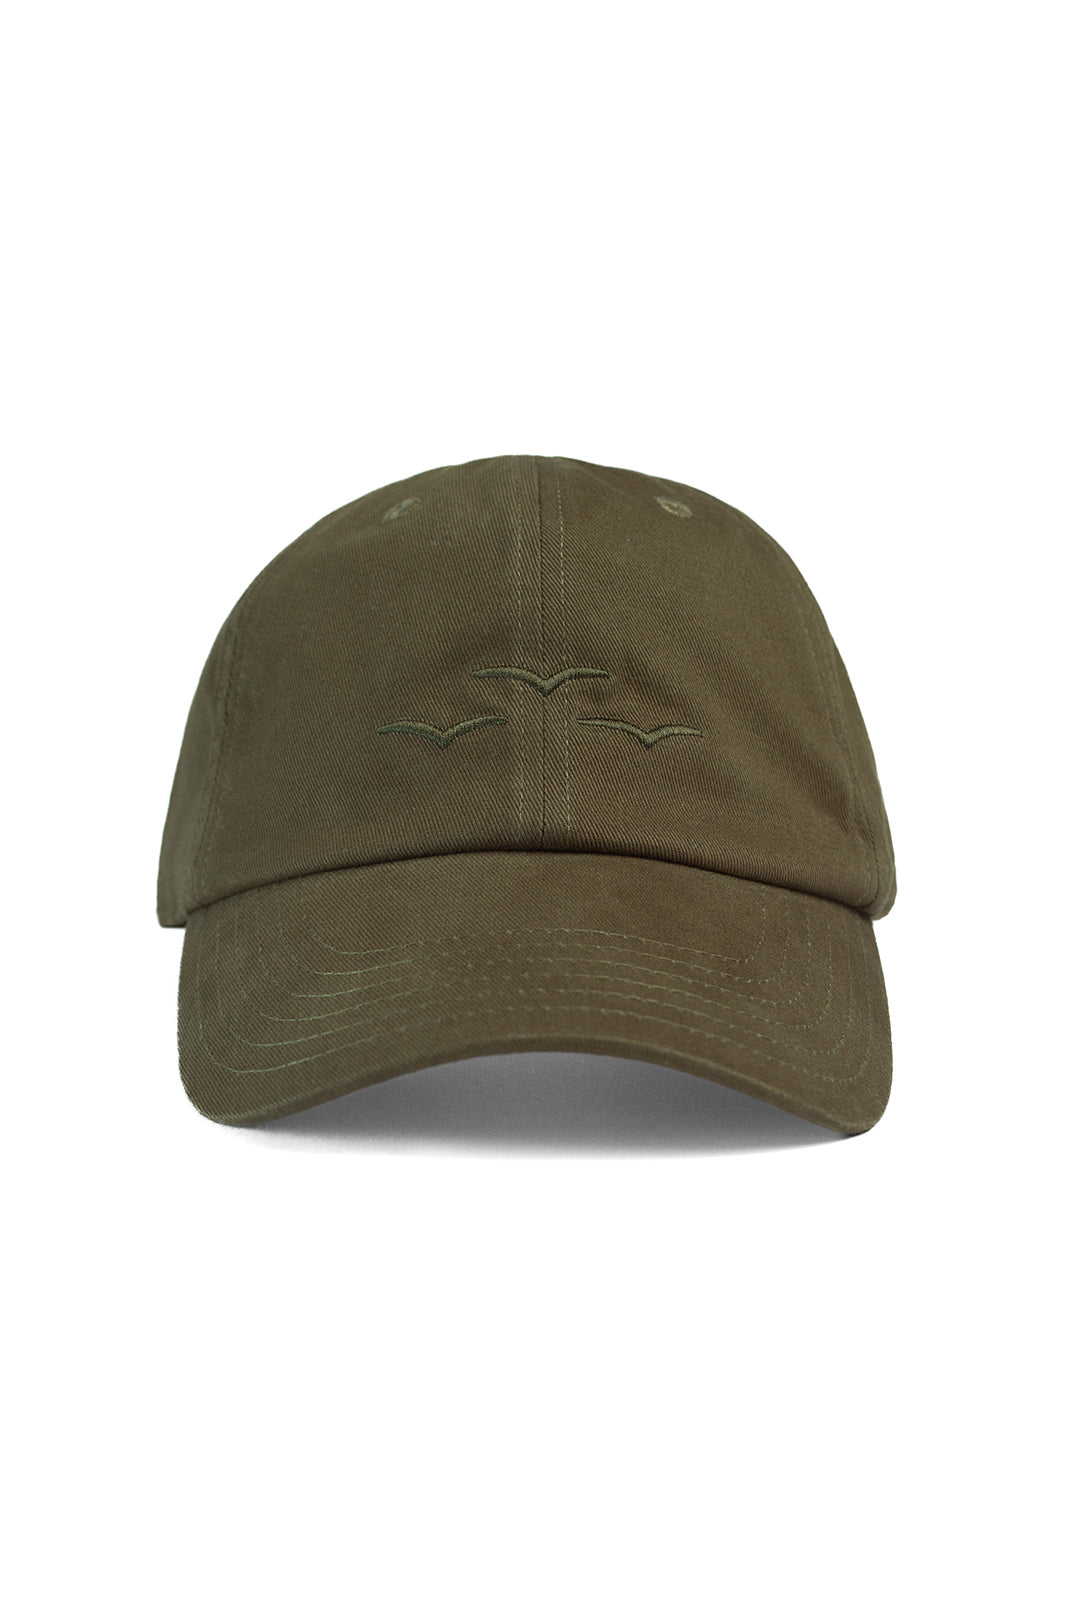 Washed cotton twill dad’s baseball cap in khaki green